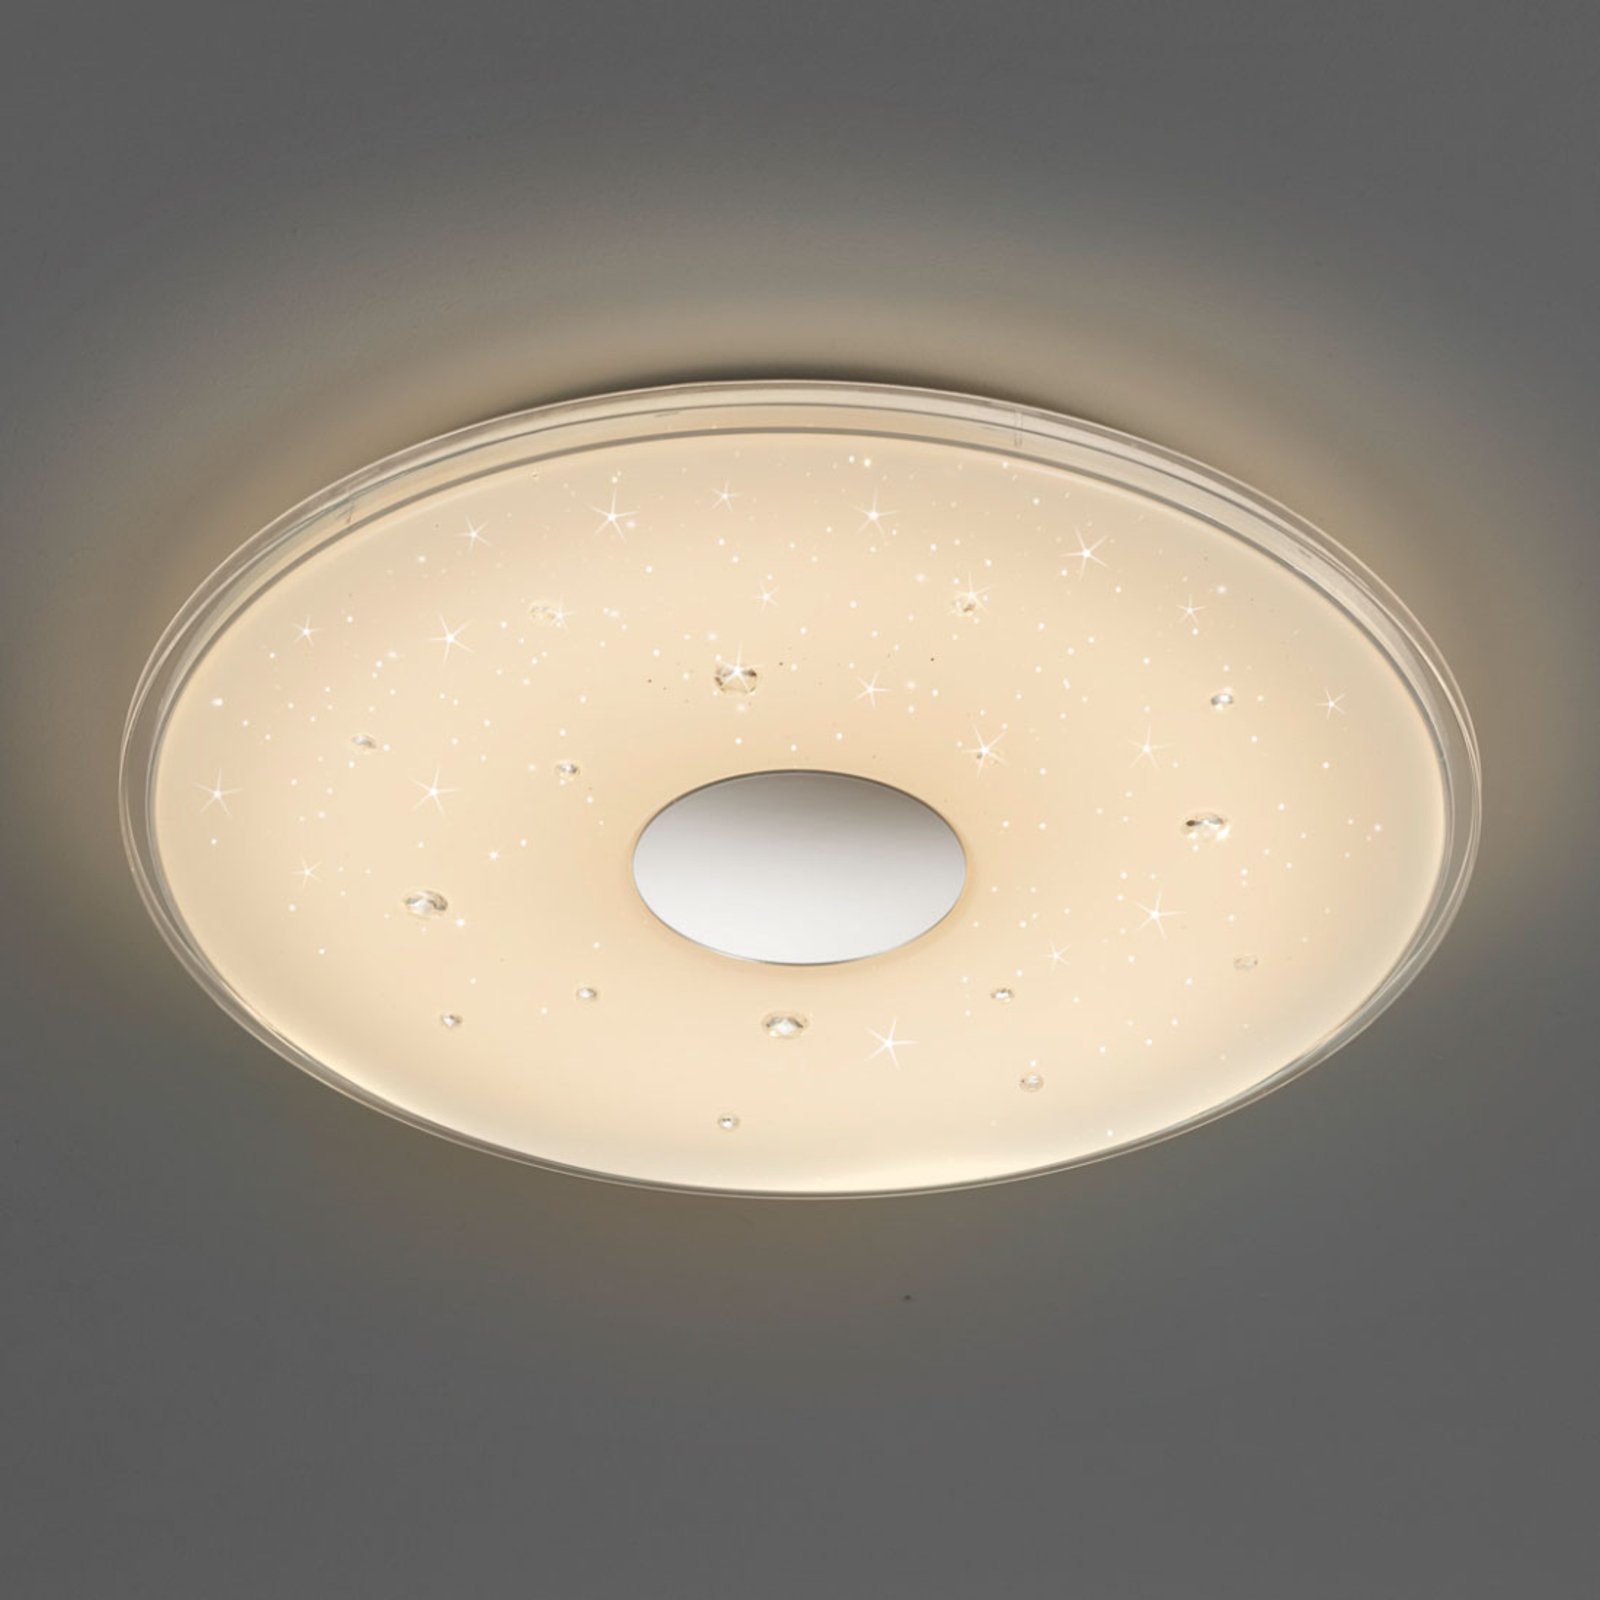 LED-Deckenlampe Seiko, Starlight-Effekt, Ø 42,5cm